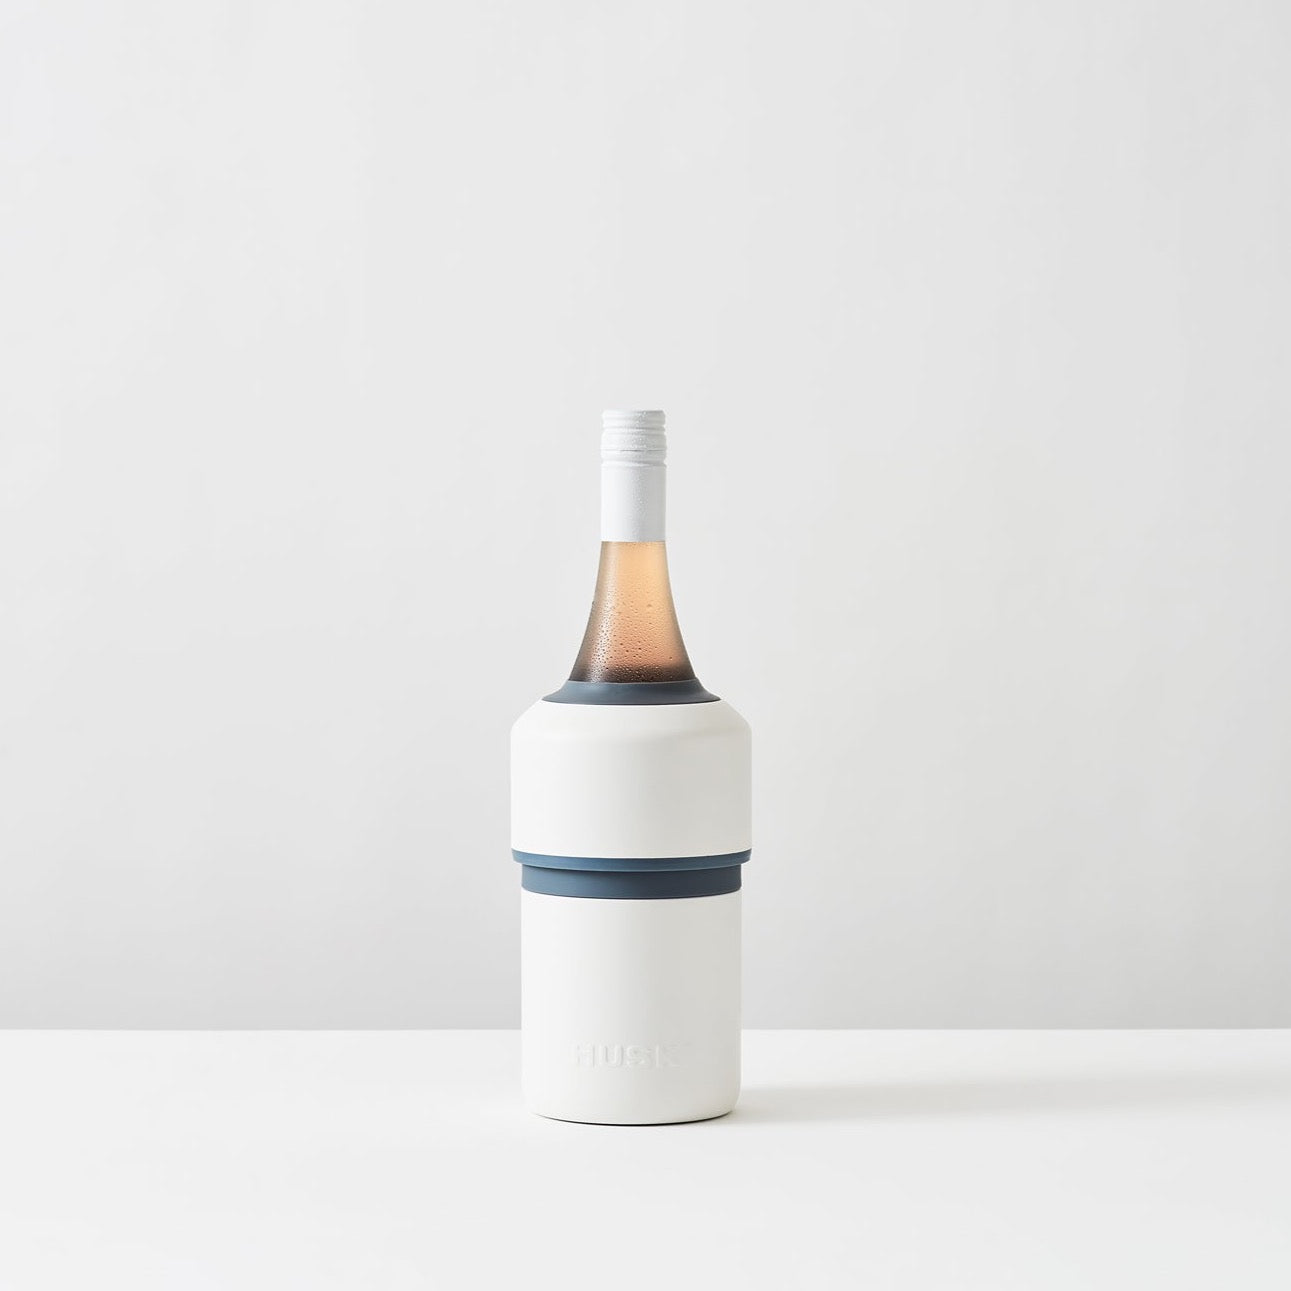 Huski Wine Cooler | White